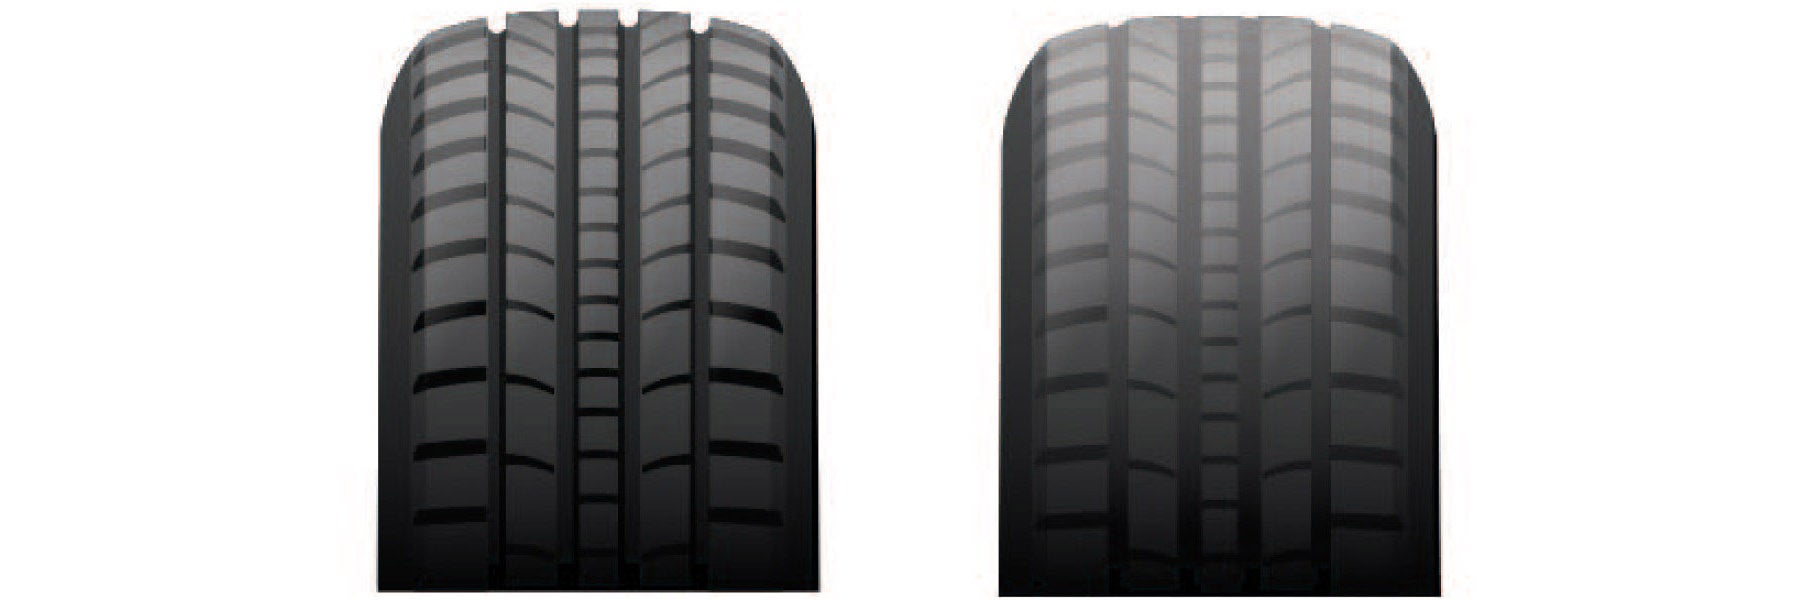 Tire tread depth comparison at Wasatch Front Kia in Ogden UT